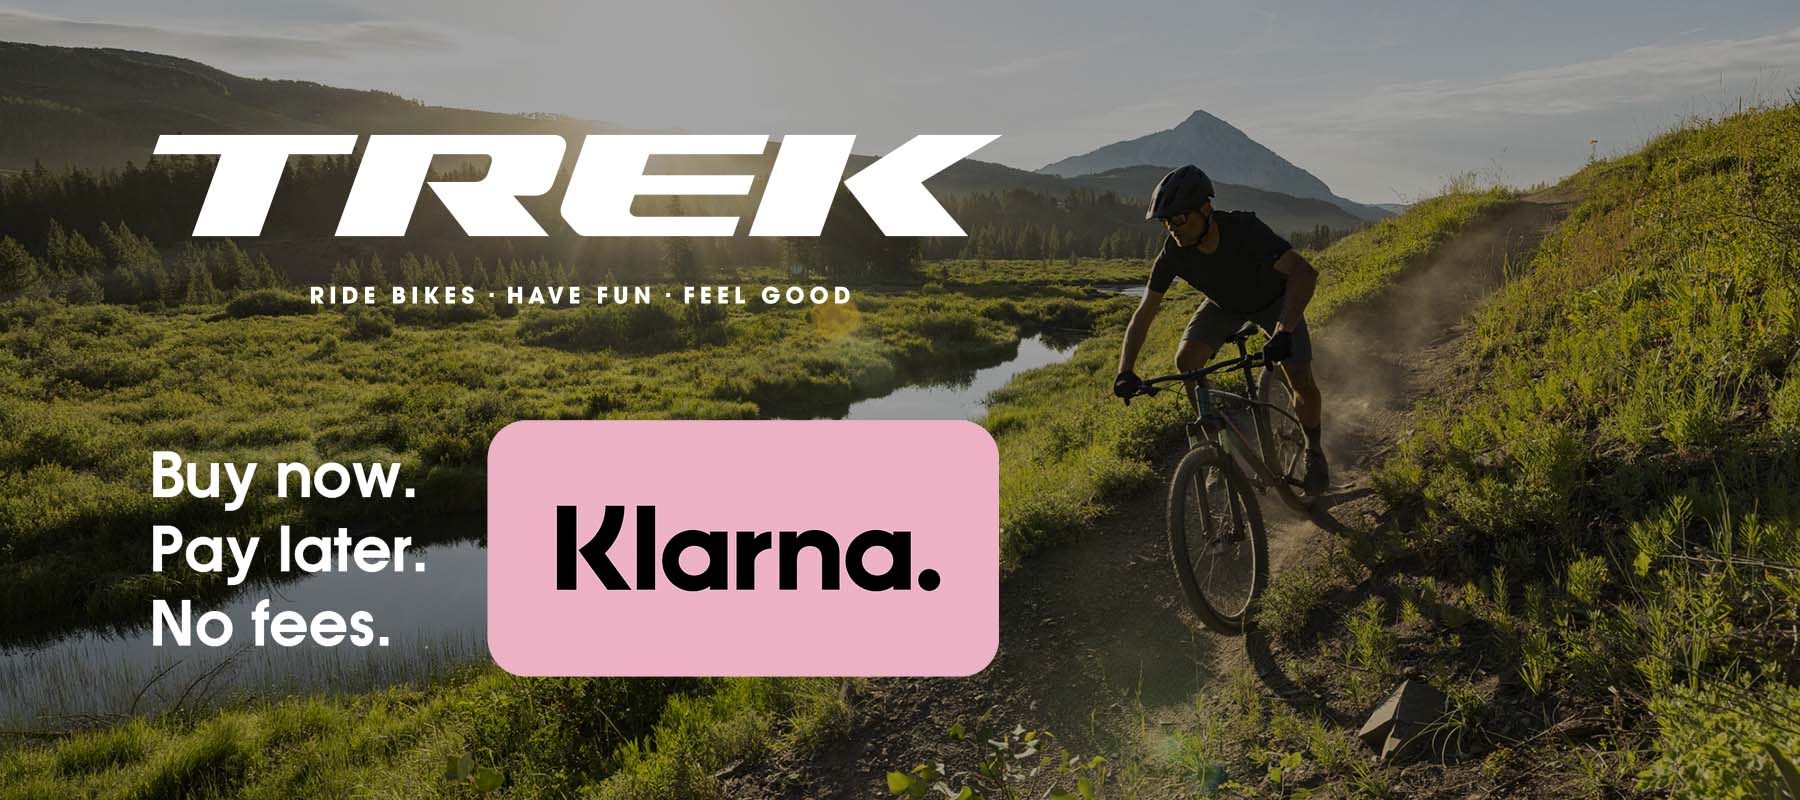 0% Finance on your new Trek Bike with Klarna